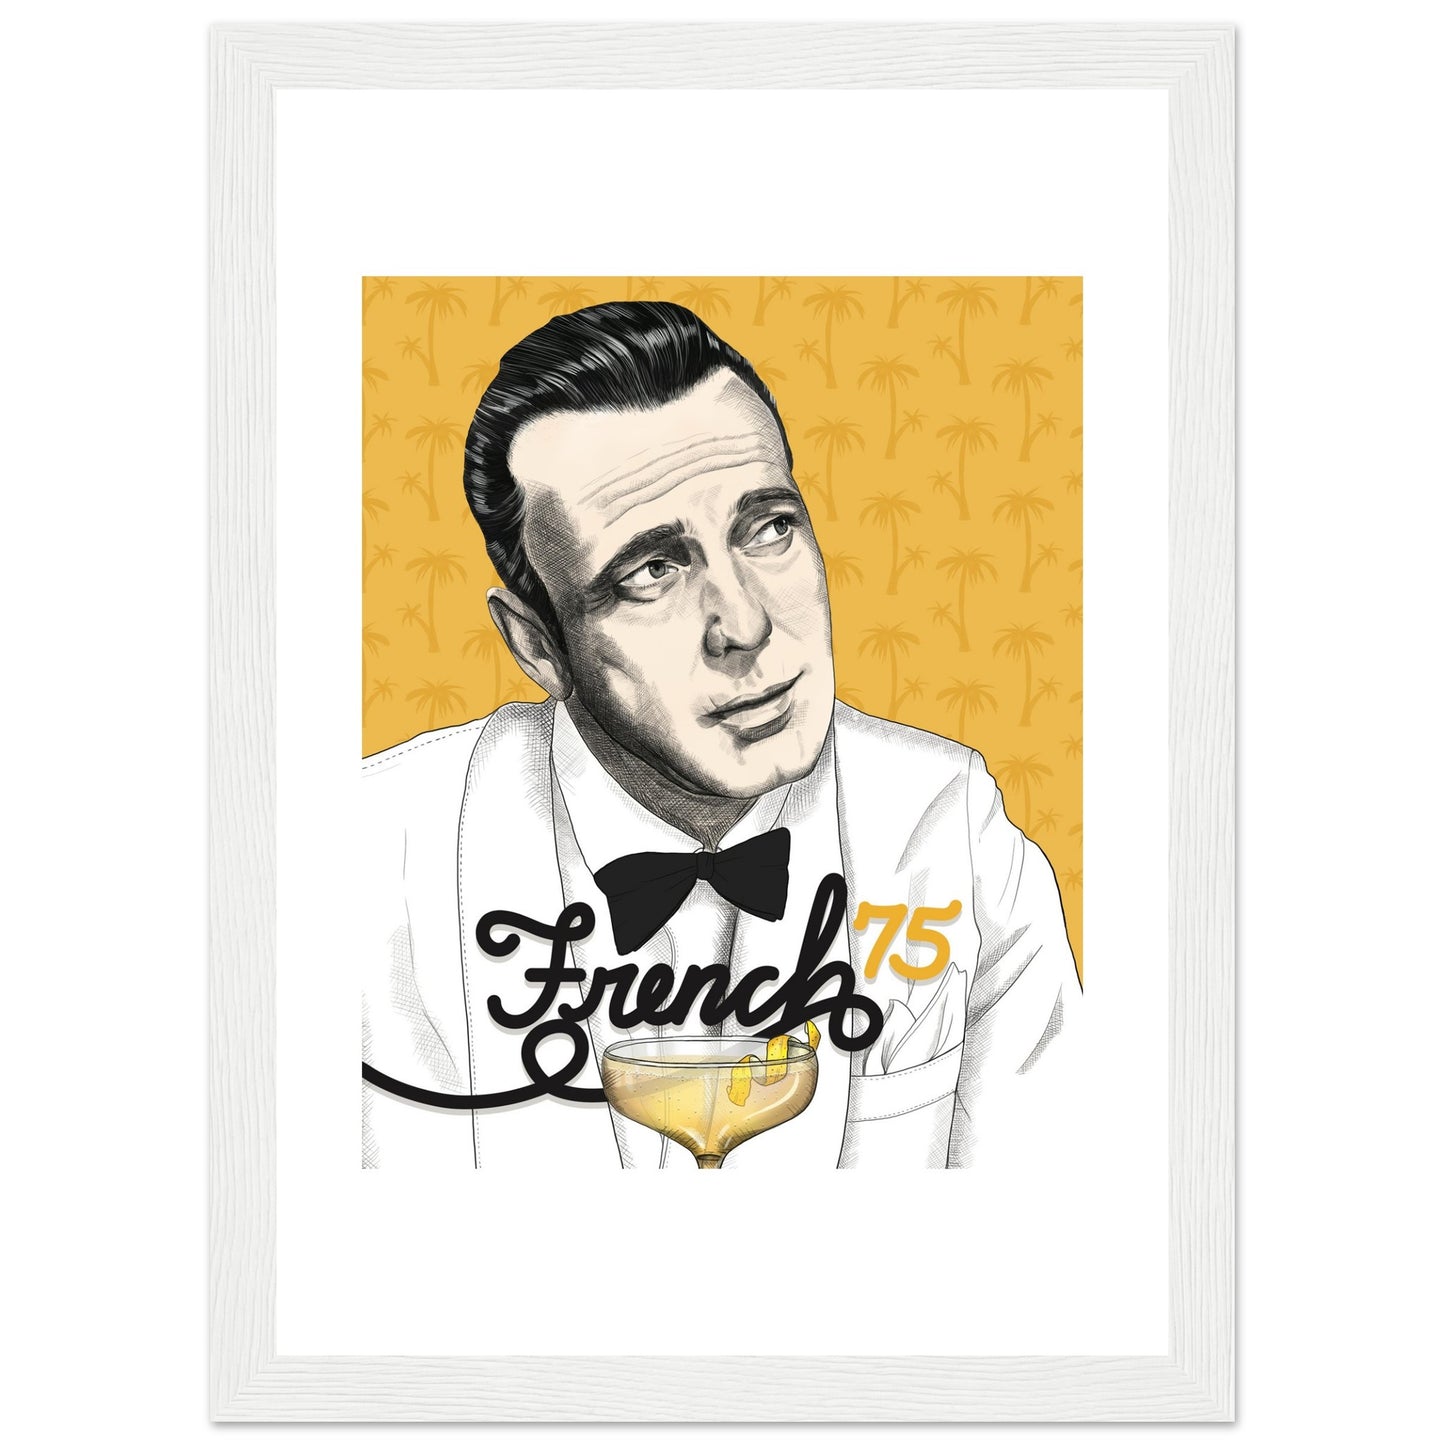 French 75 | Humphrey Bogart | Casablanca - Framed Poster